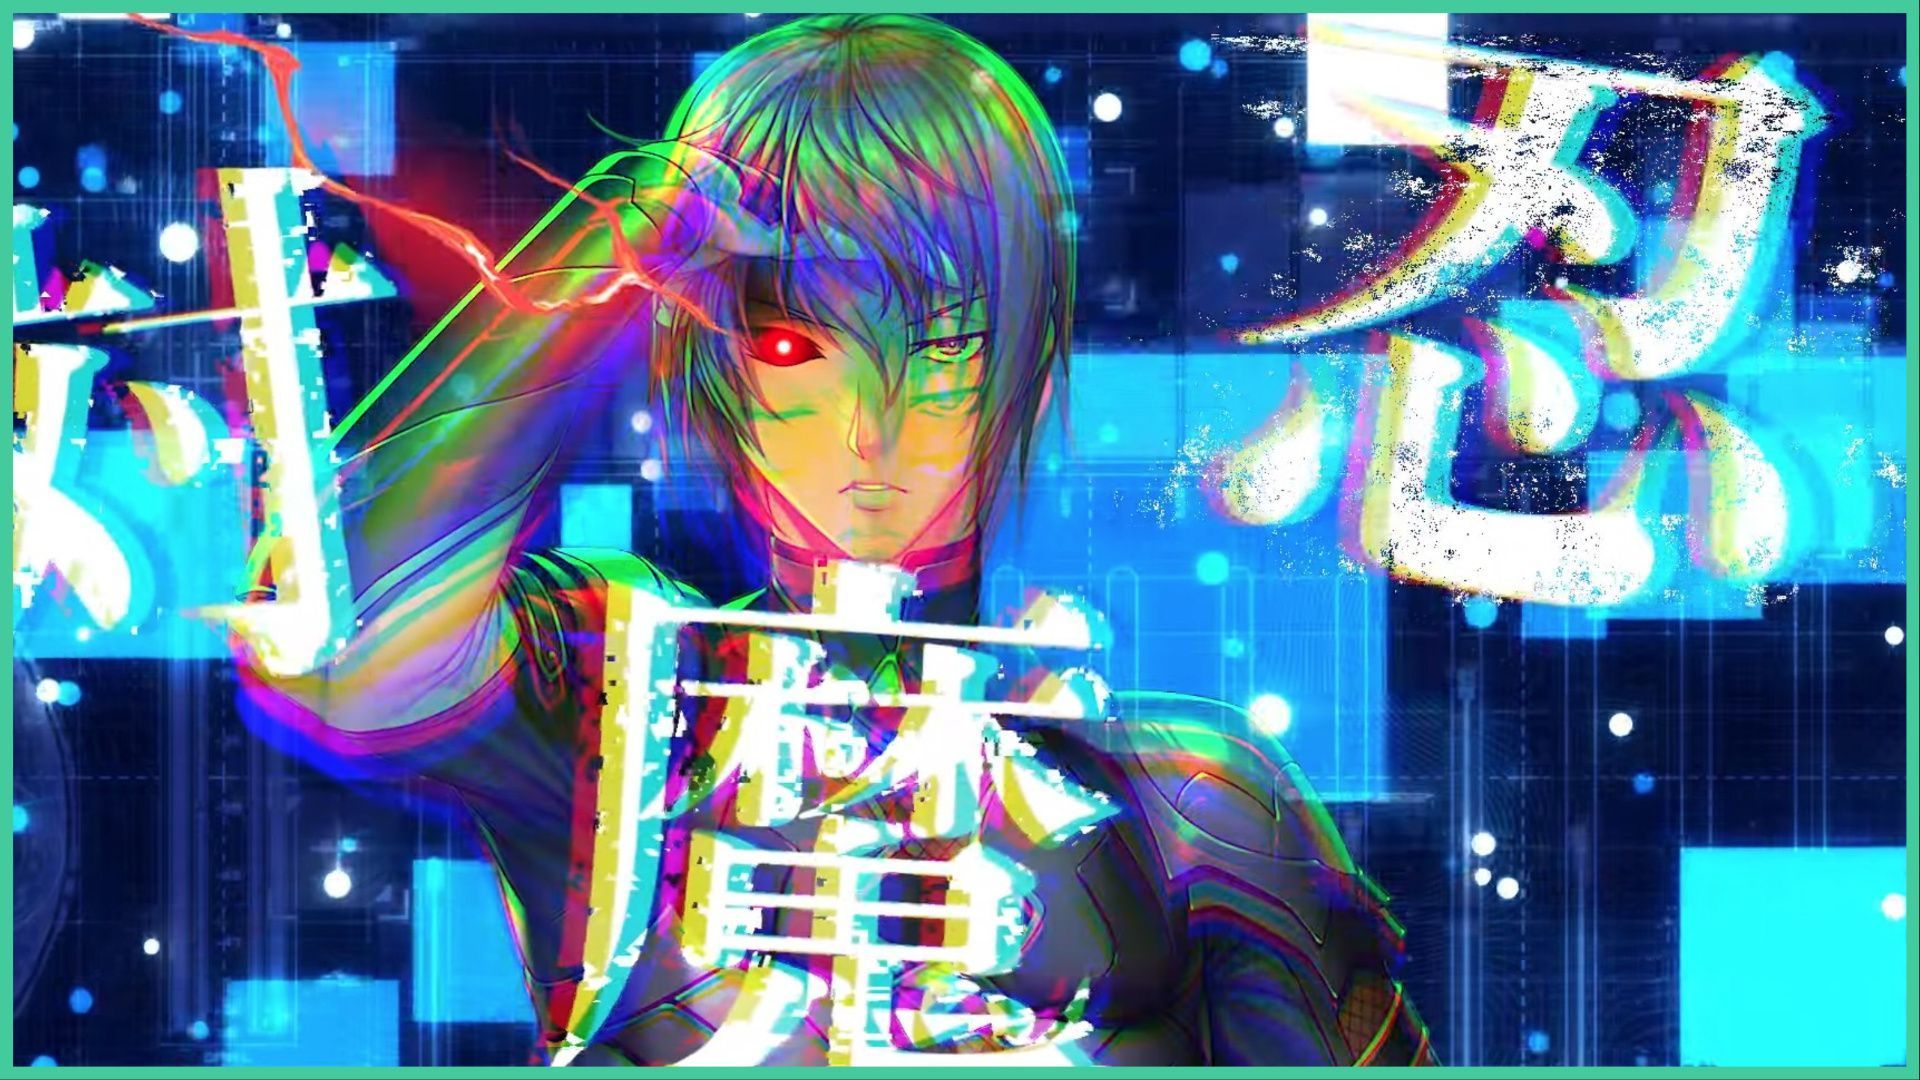 Boy with Blue Glowing Eyes Anime Wallpaper - Anime Wallpaper 4k